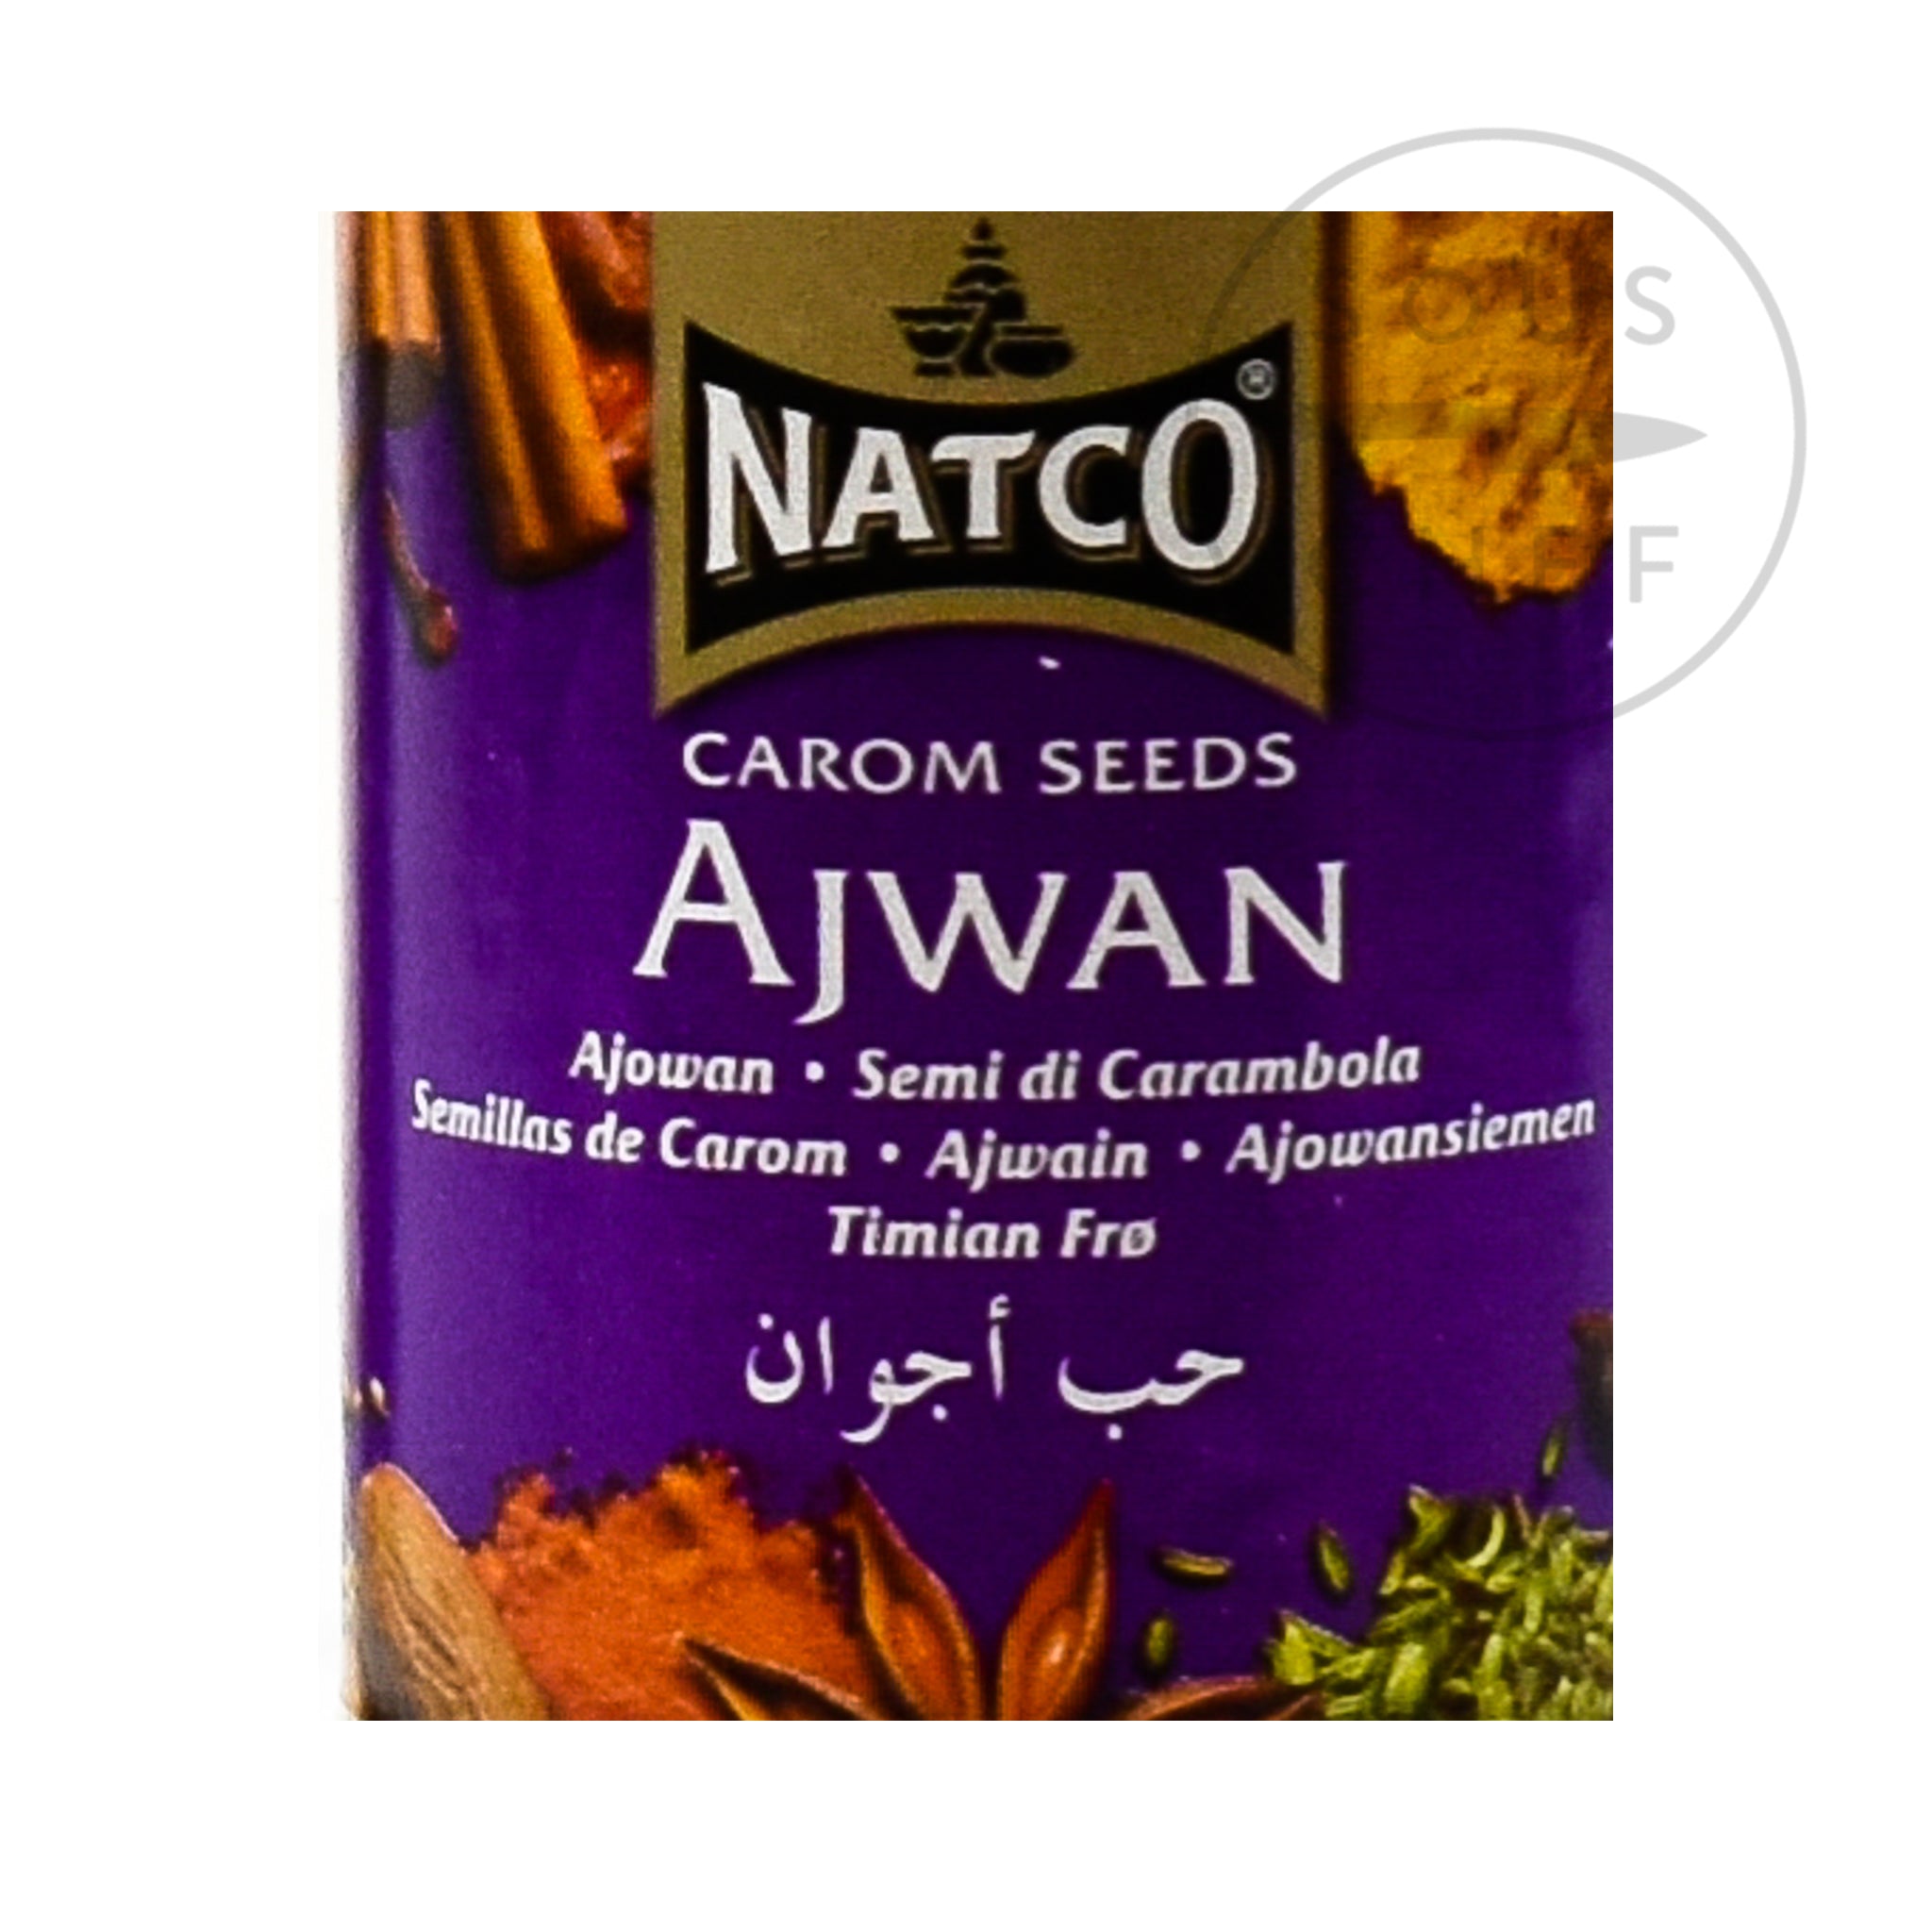 Natco Ajwan Seeds, 100g